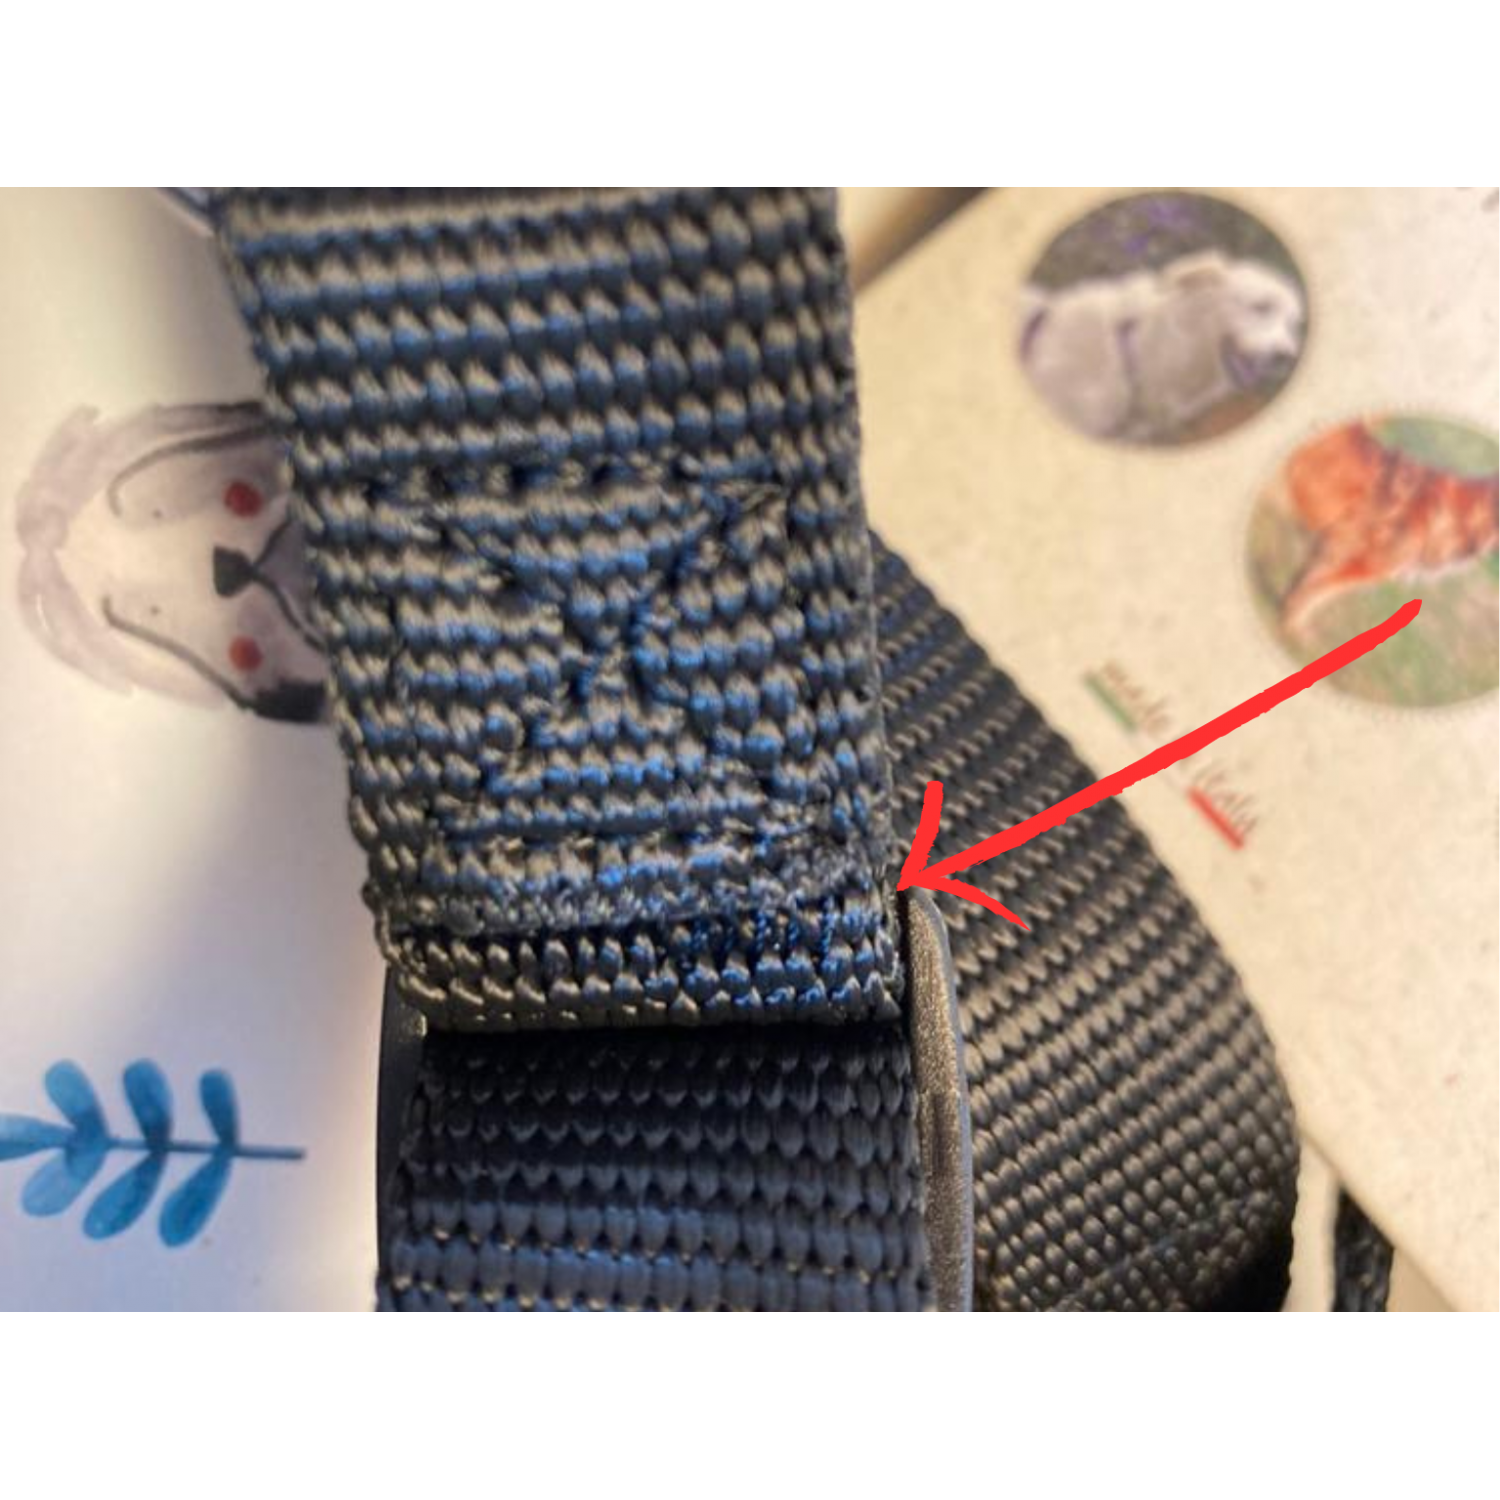 Black Harness -Size S - Stitching defect